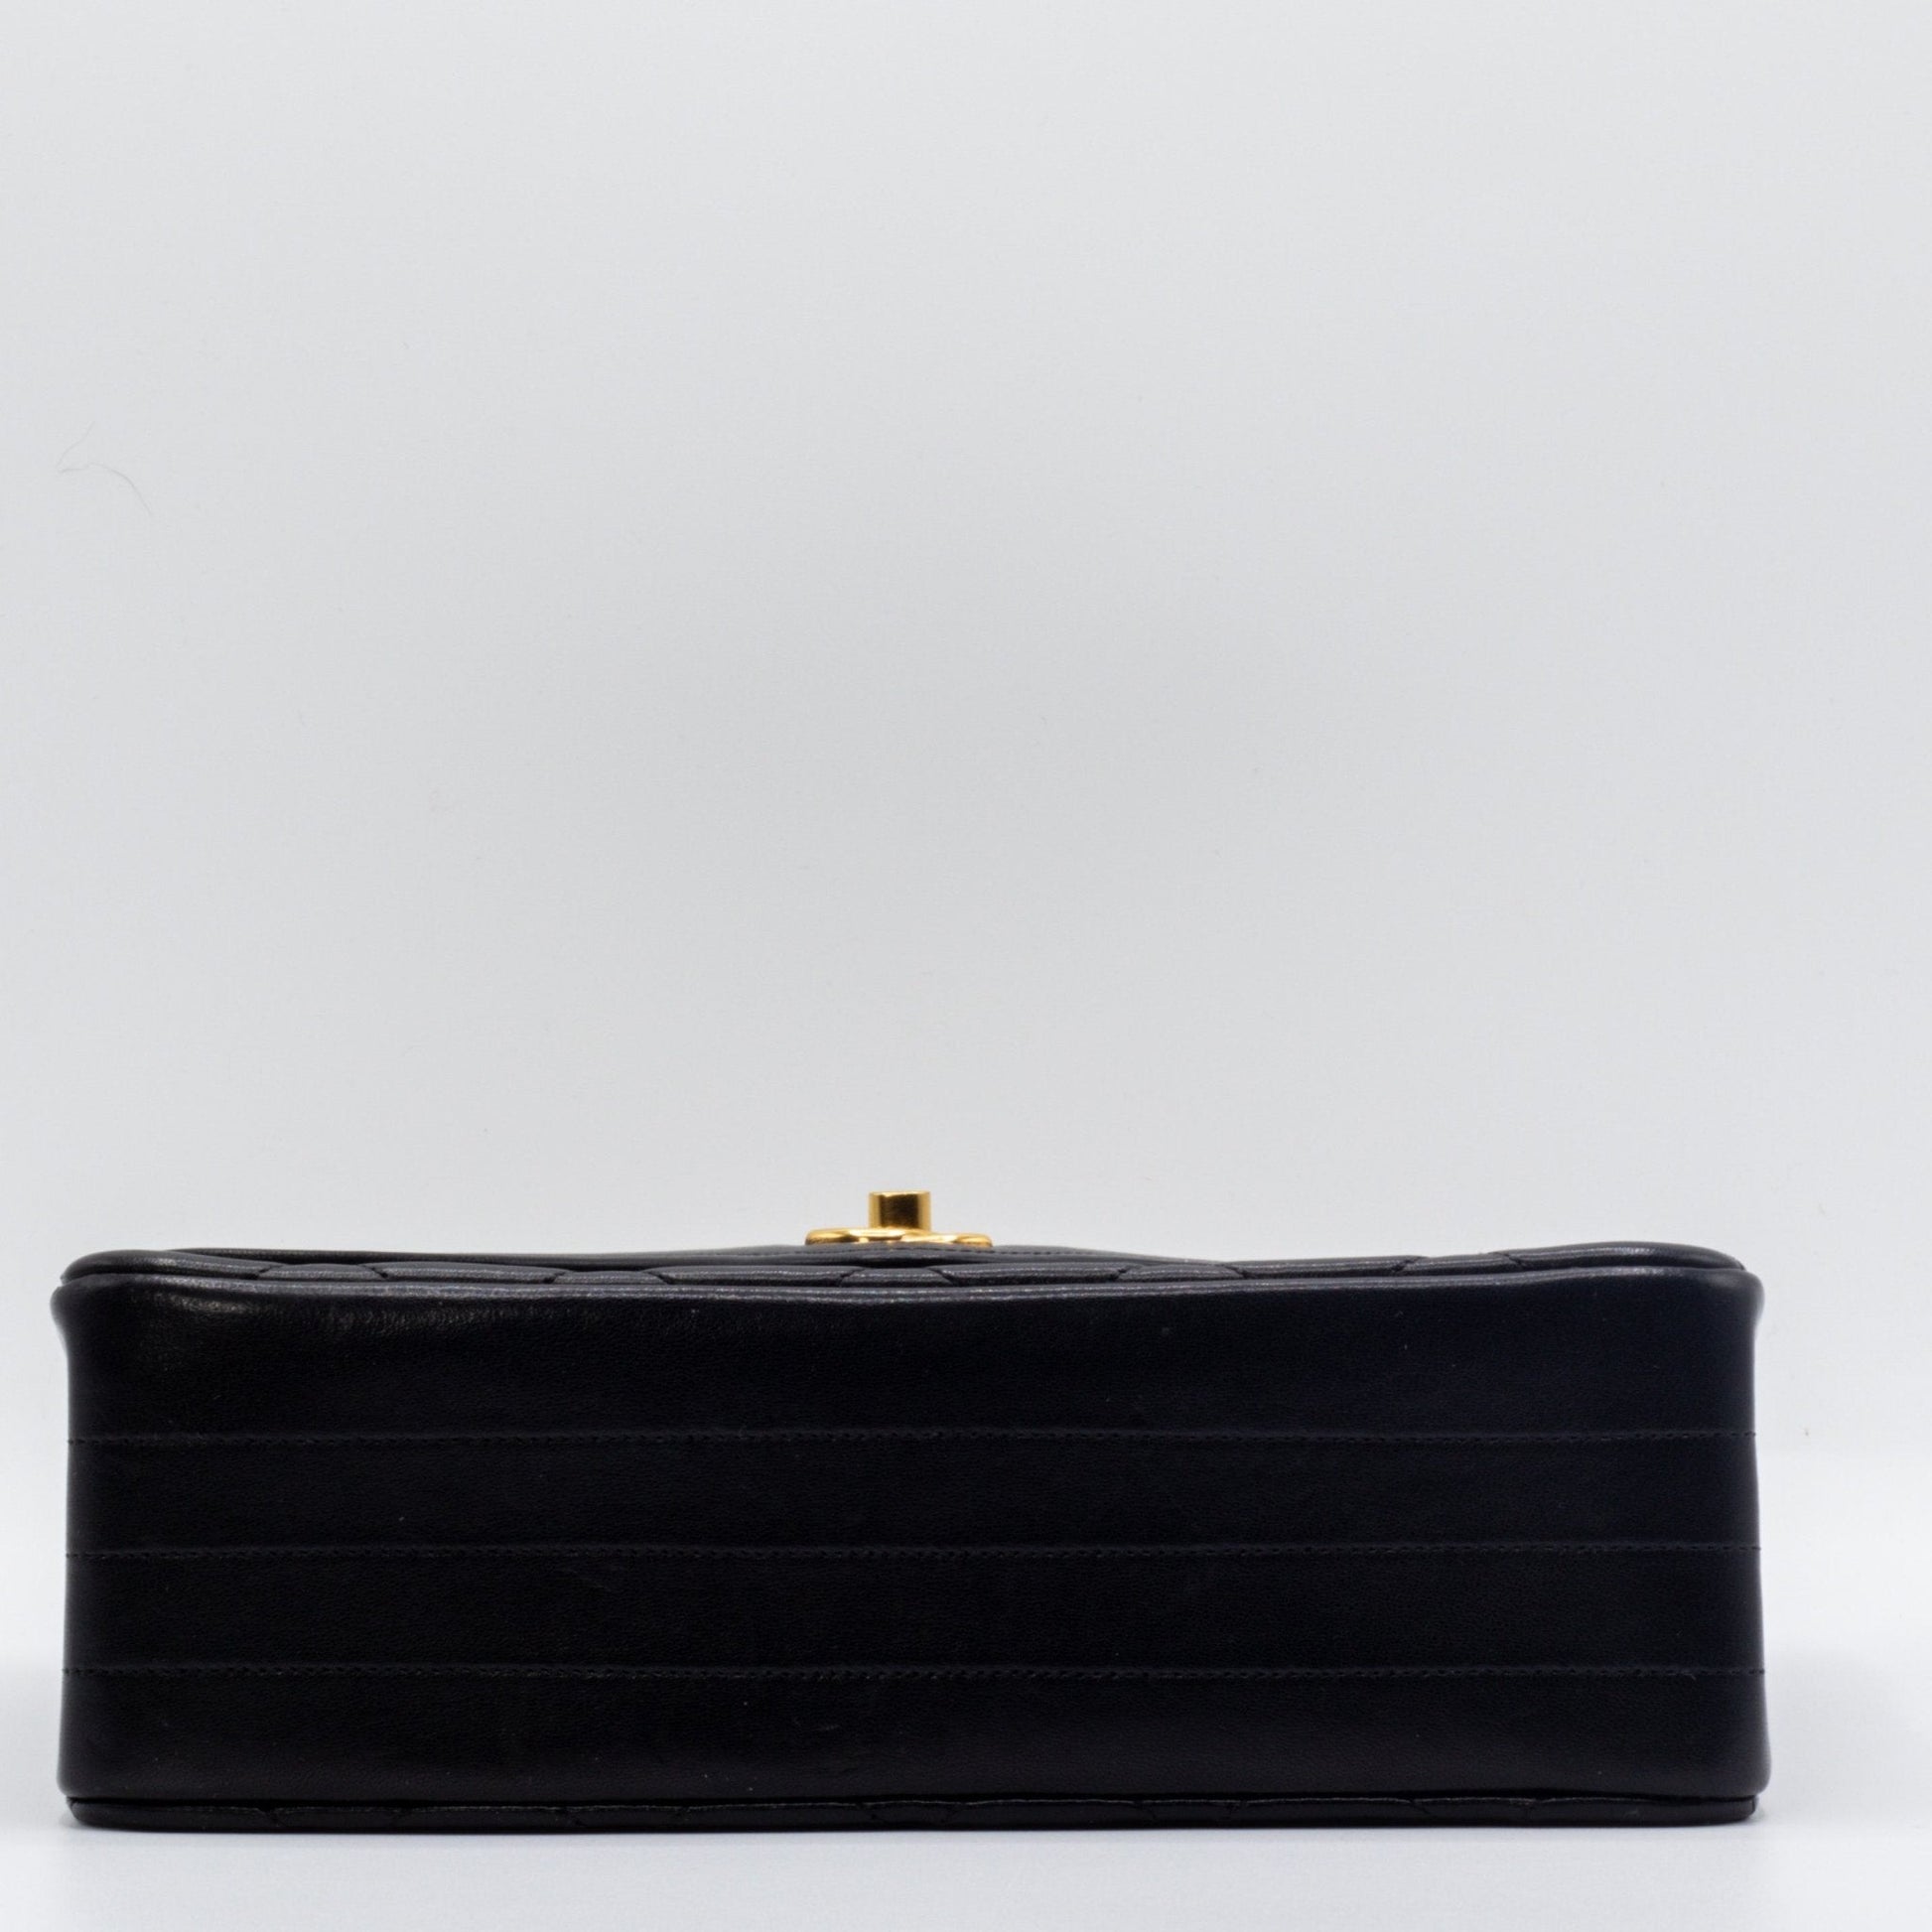 Chanel Classic Flap Bag in Black Matelassé Leather - Tabita Bags